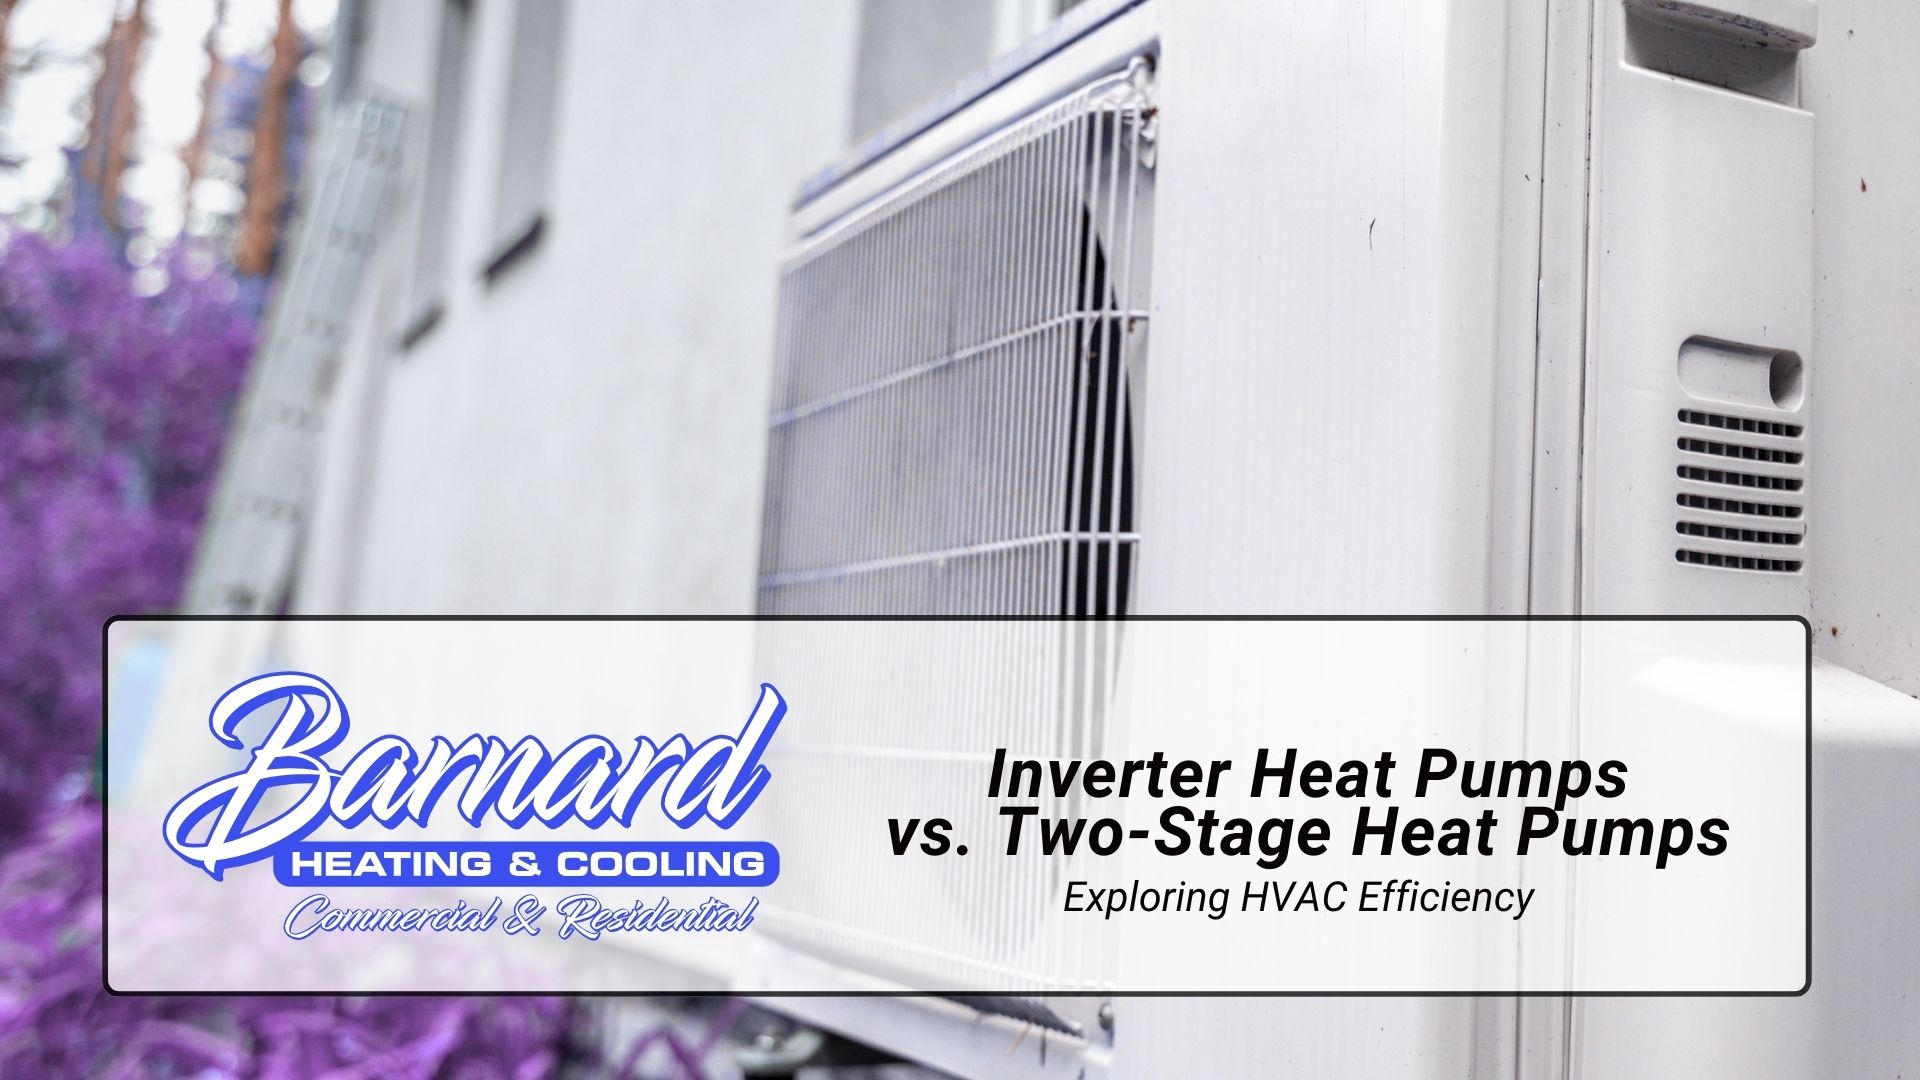 Copy of Inverter Heat Pumps vs. Two-Stage Heat Pumps Exploring HVAC Efficiency